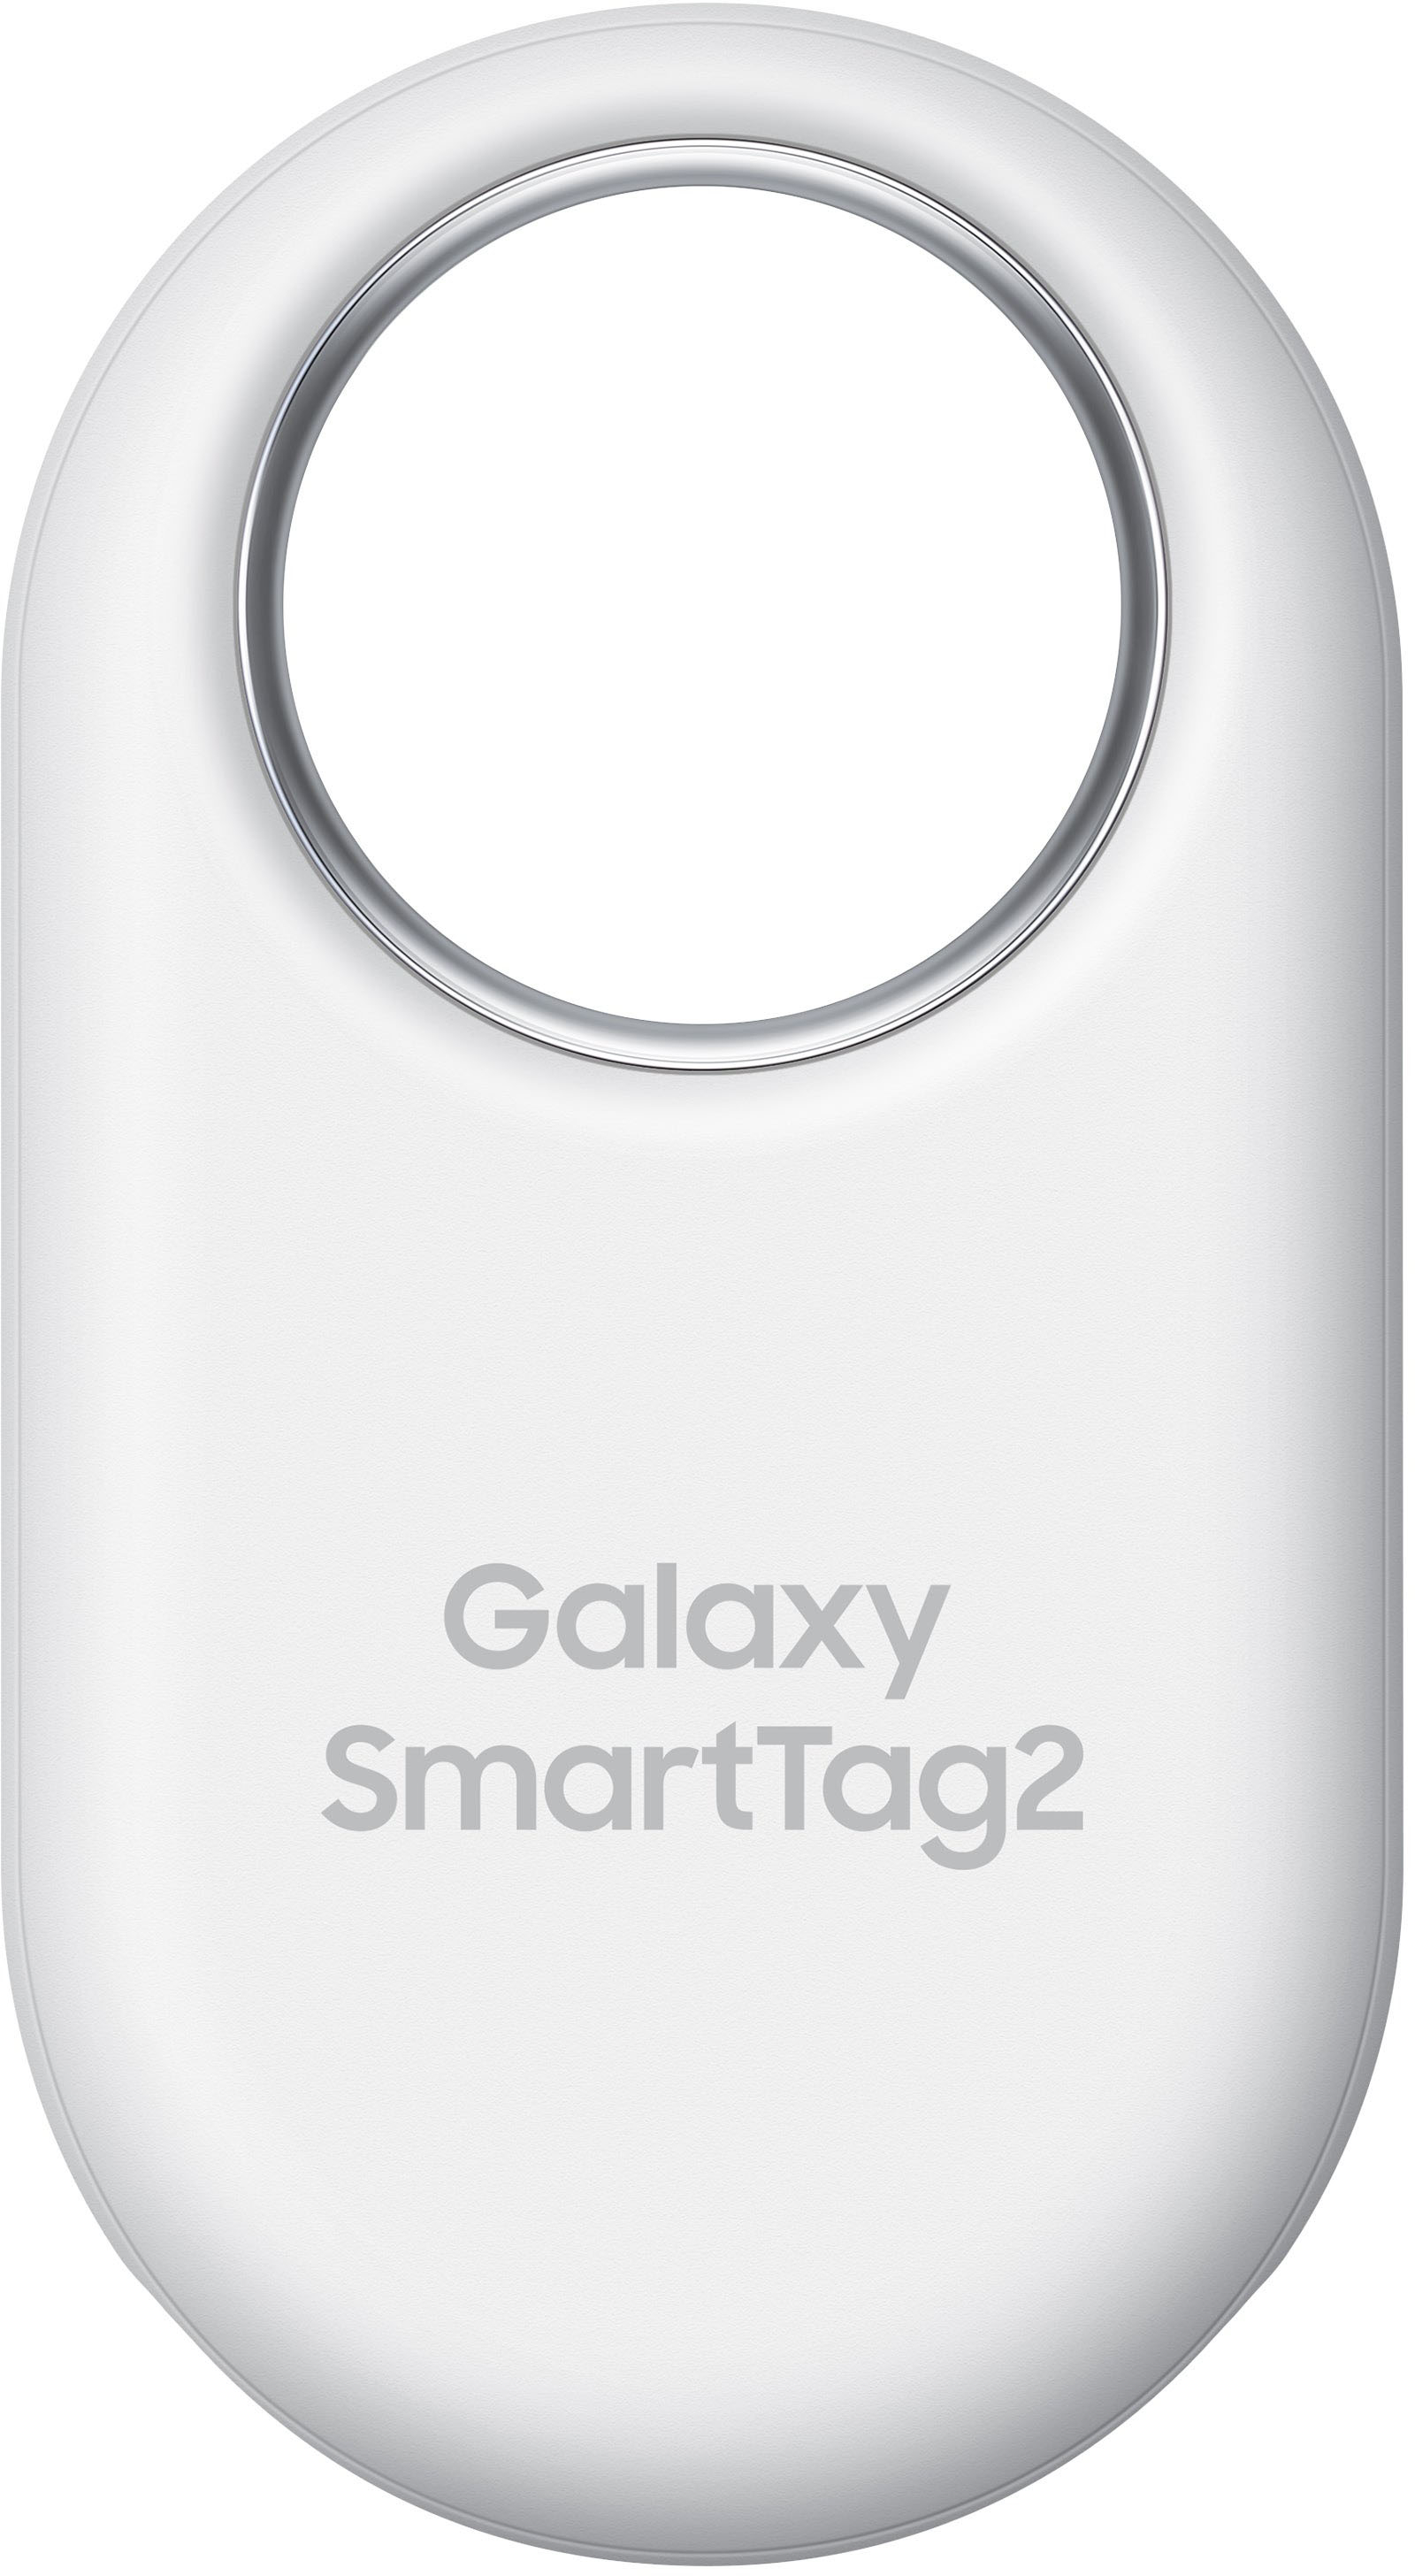 Photos - GPS Tracker Samsung  Galaxy SmartTag2 - White EI-T5600BWEGUS 